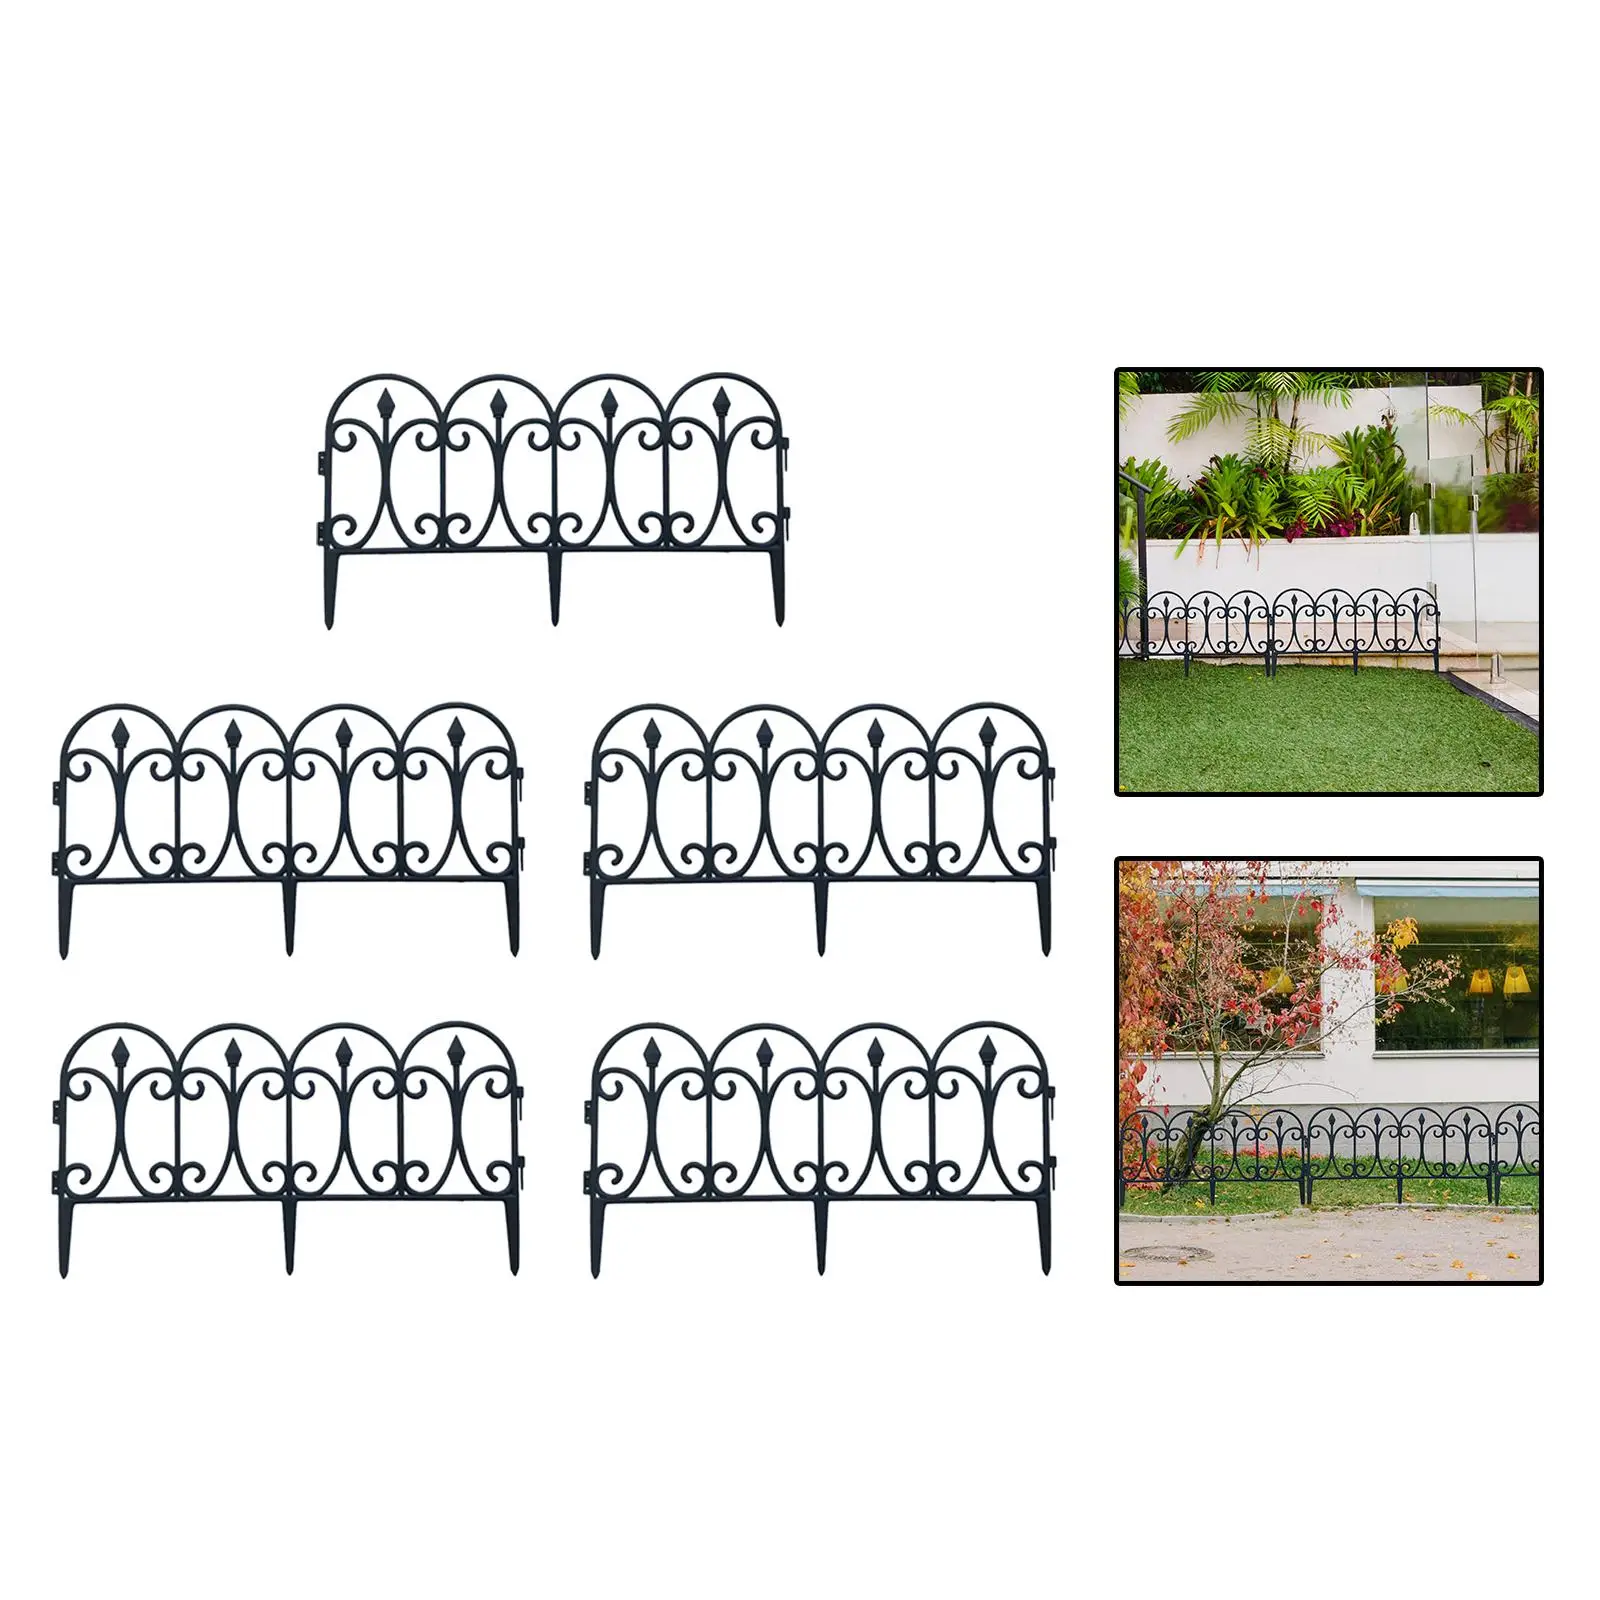 Garden Fence Edging, 5Pcs Fence Lawn Border Decorative  Grass Bed Border for Landscaping Garden